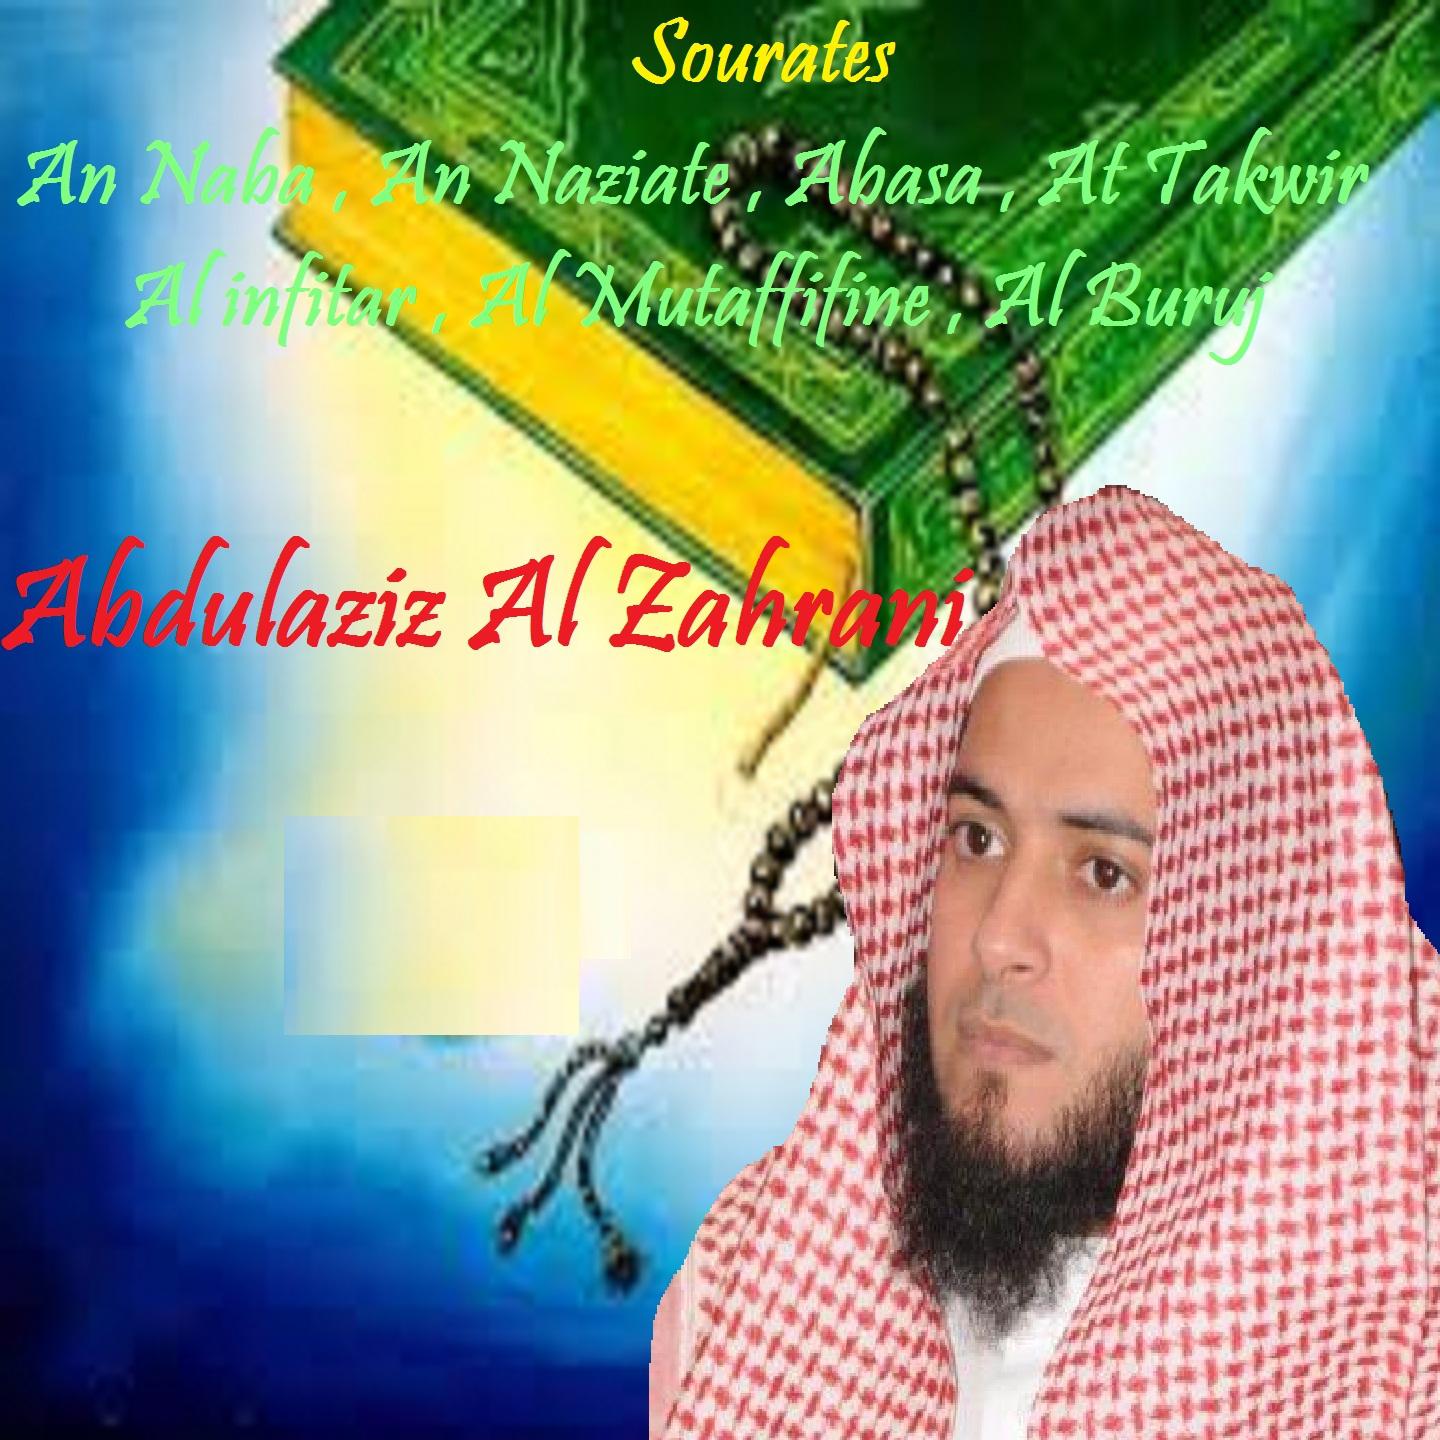 Постер альбома Sourates An Naba , An Naziate , Abasa , At Takwir , Al infitar , Al Mutaffifine , Al Buruj